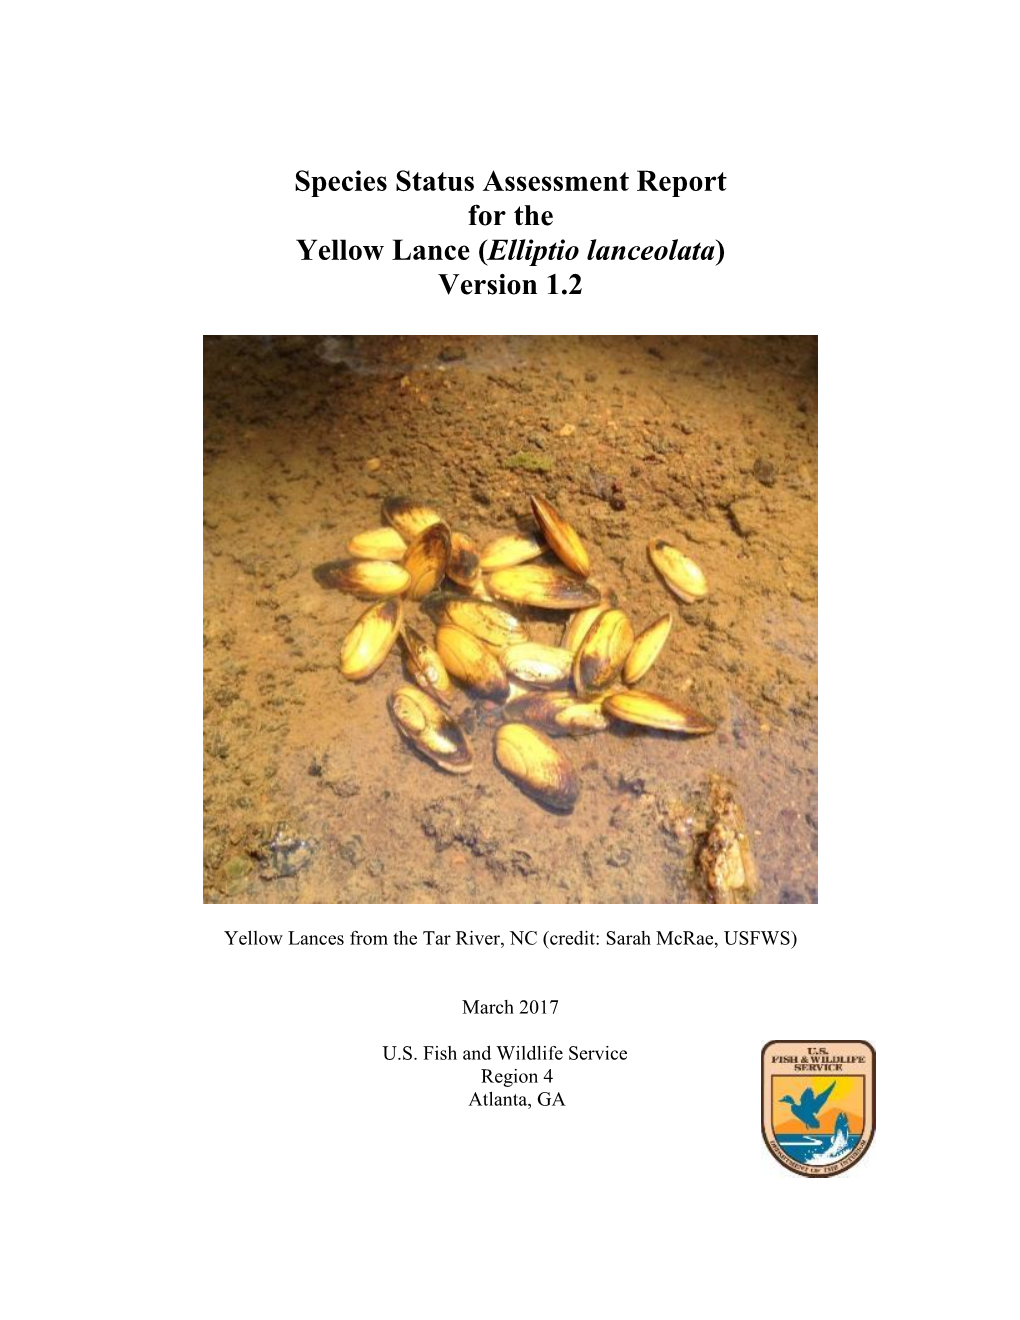 Species Status Assessment Report for the Yellow Lance (Elliptio Lanceolata) Version 1.2